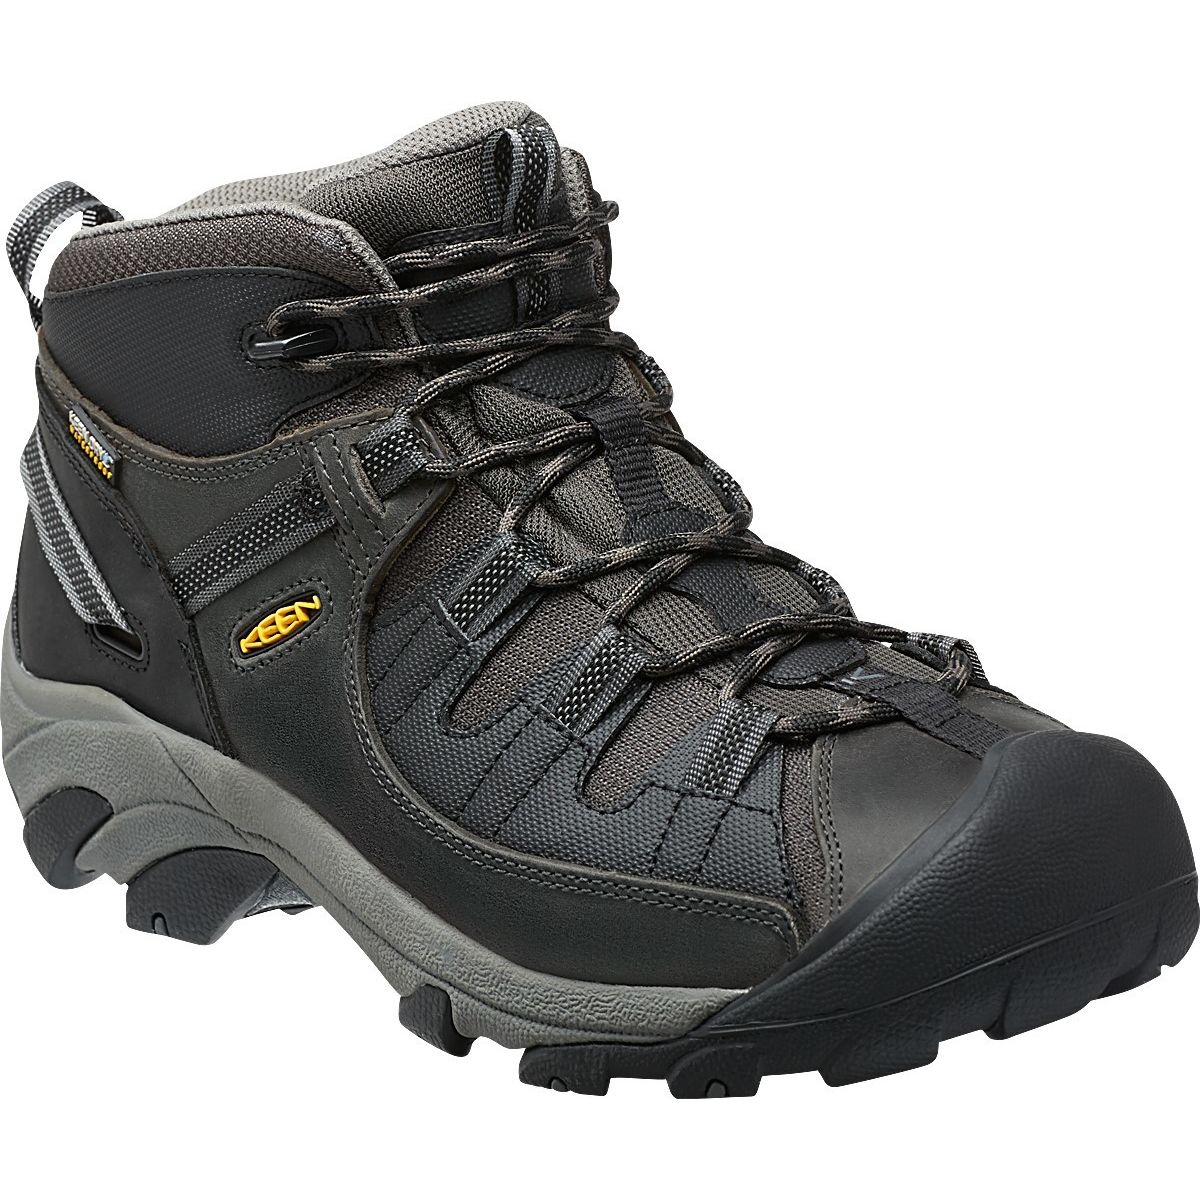 Keen Targhee II Mid Tac Hiking Boot Men'S | eBay